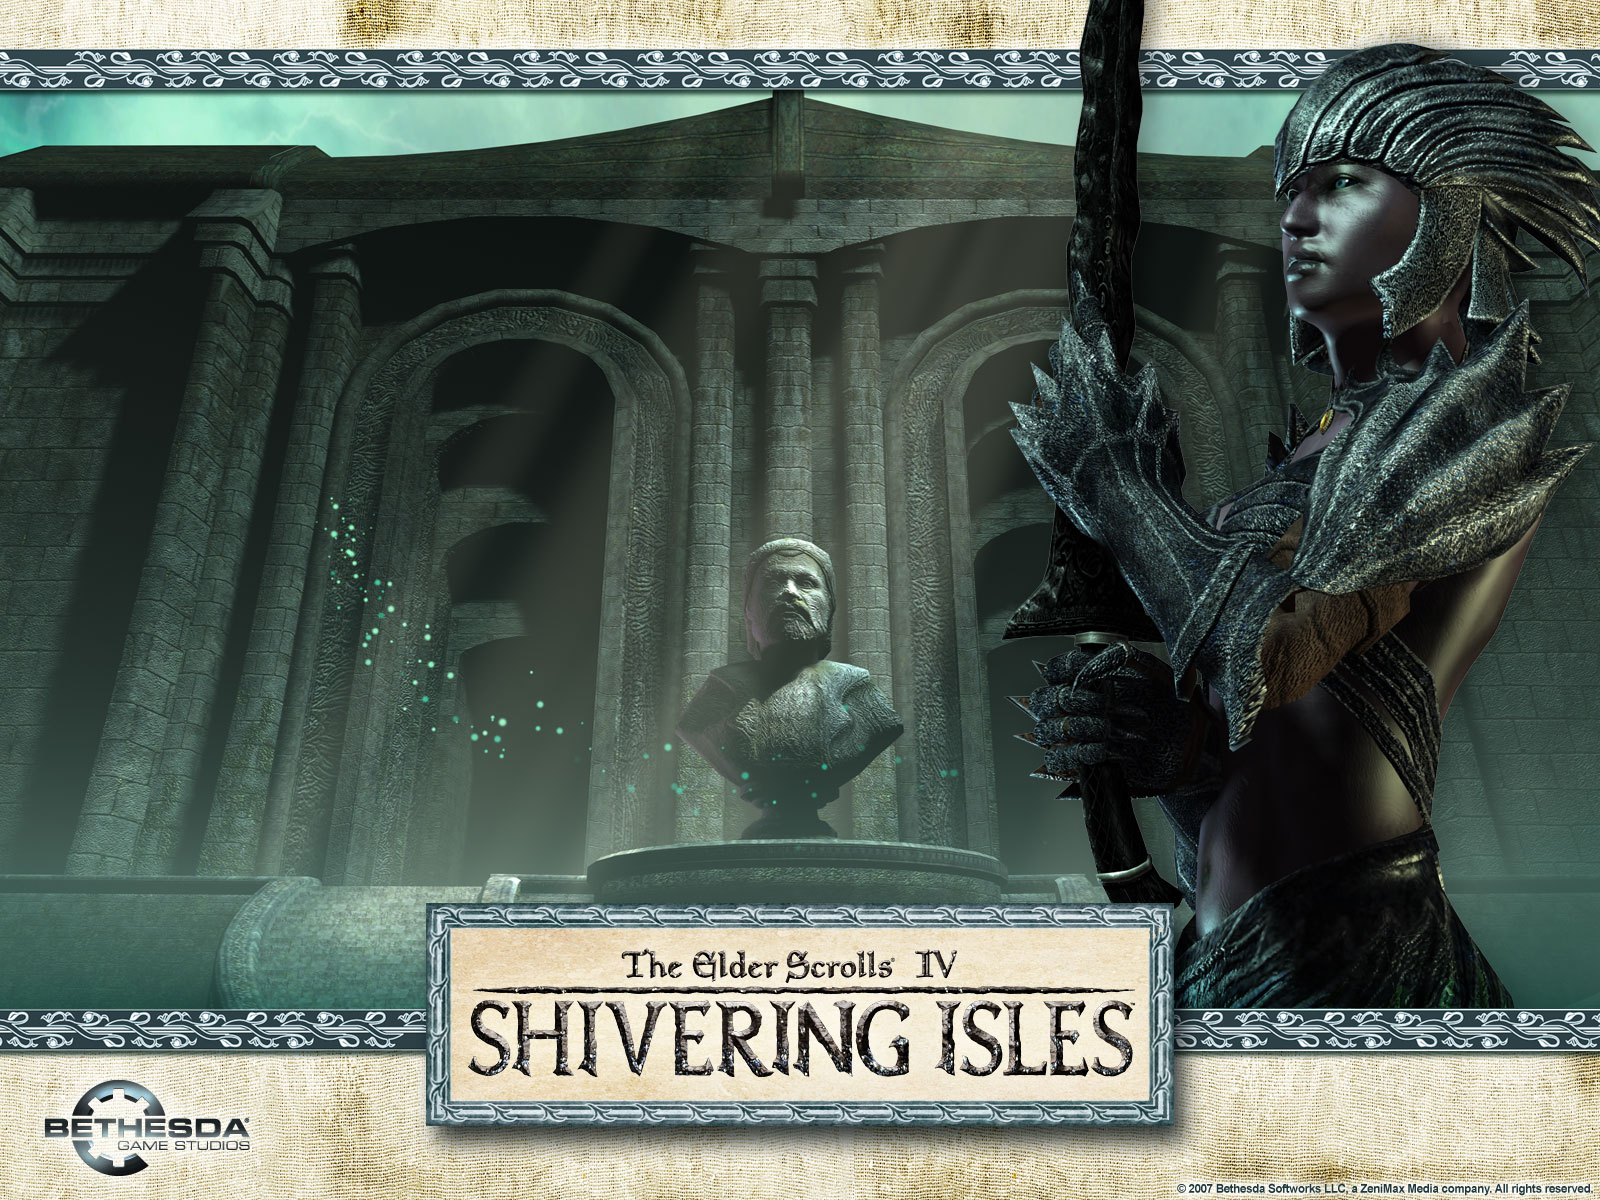 The_Elder_Scrolls_IV_Shivering_Isles_02_1600x1200.jpg